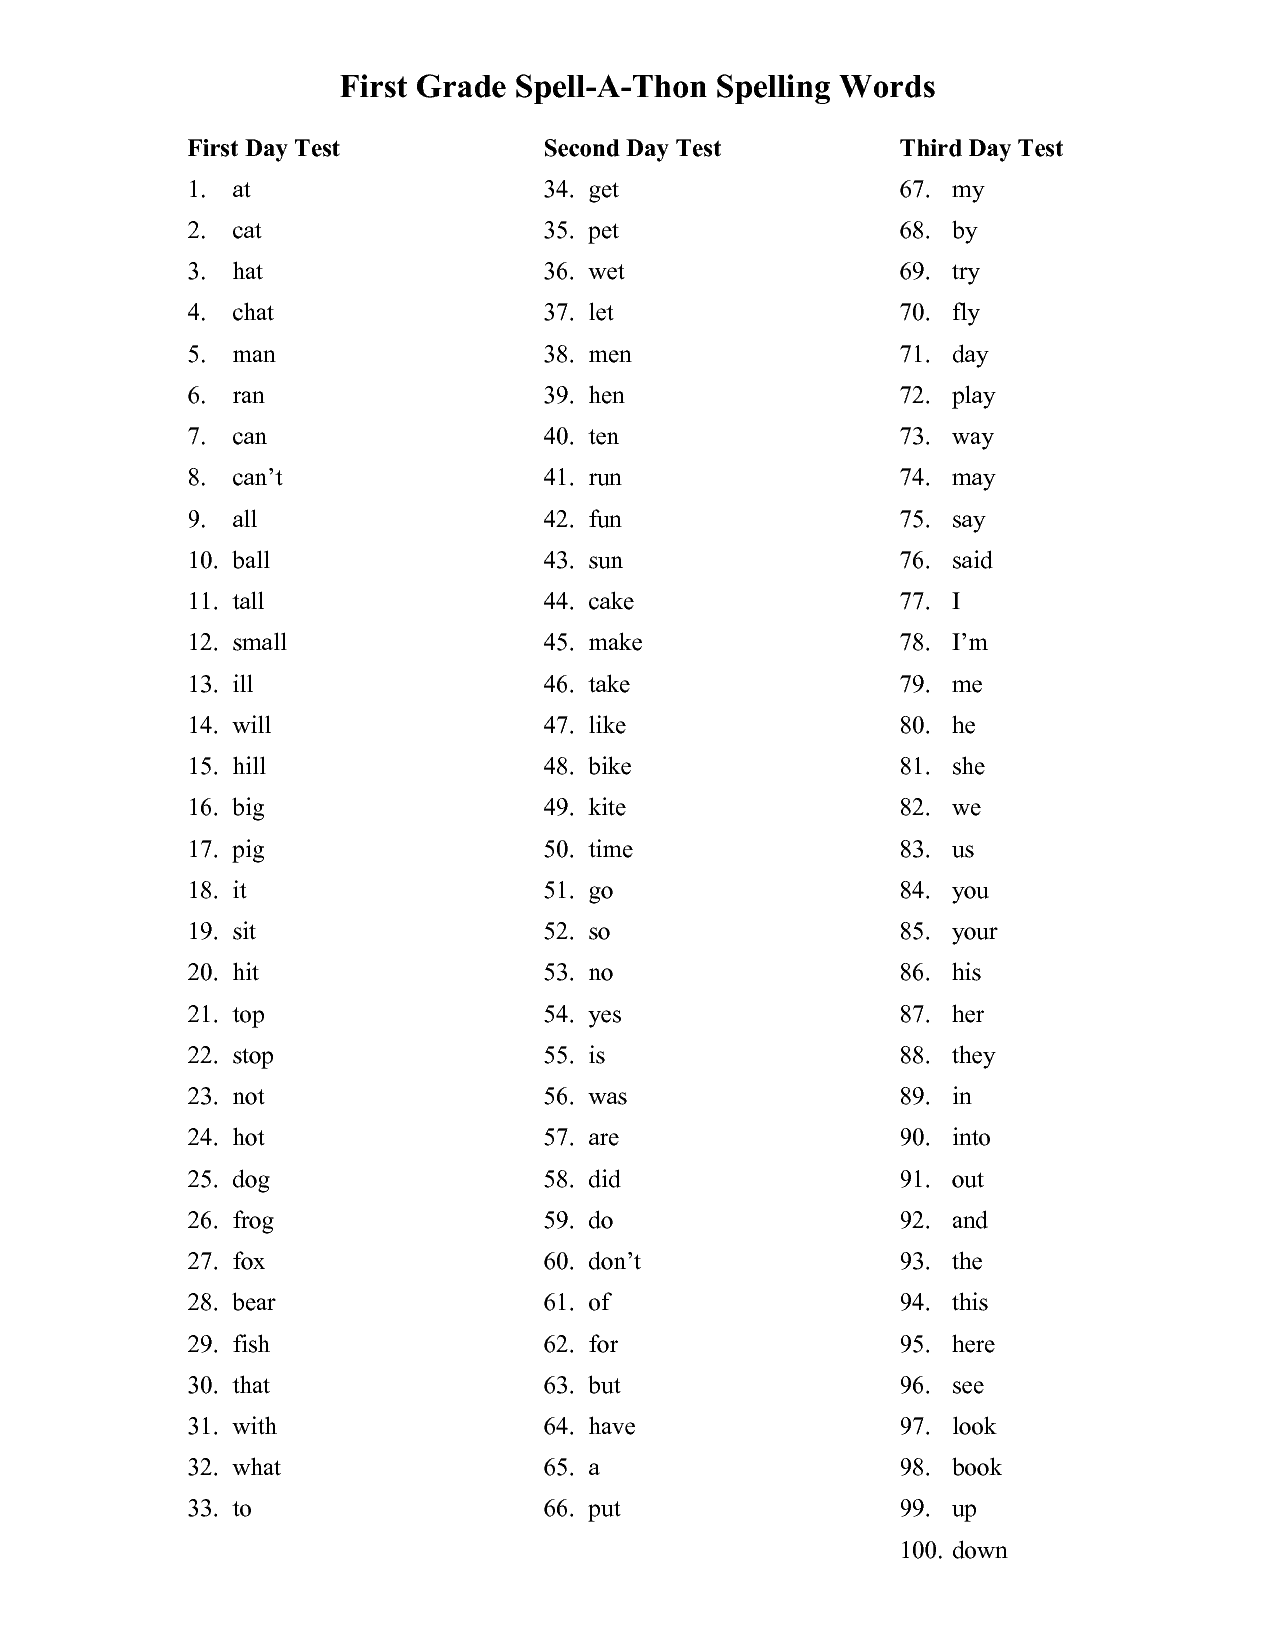 1st Grade Spelling Words Worksheet Image